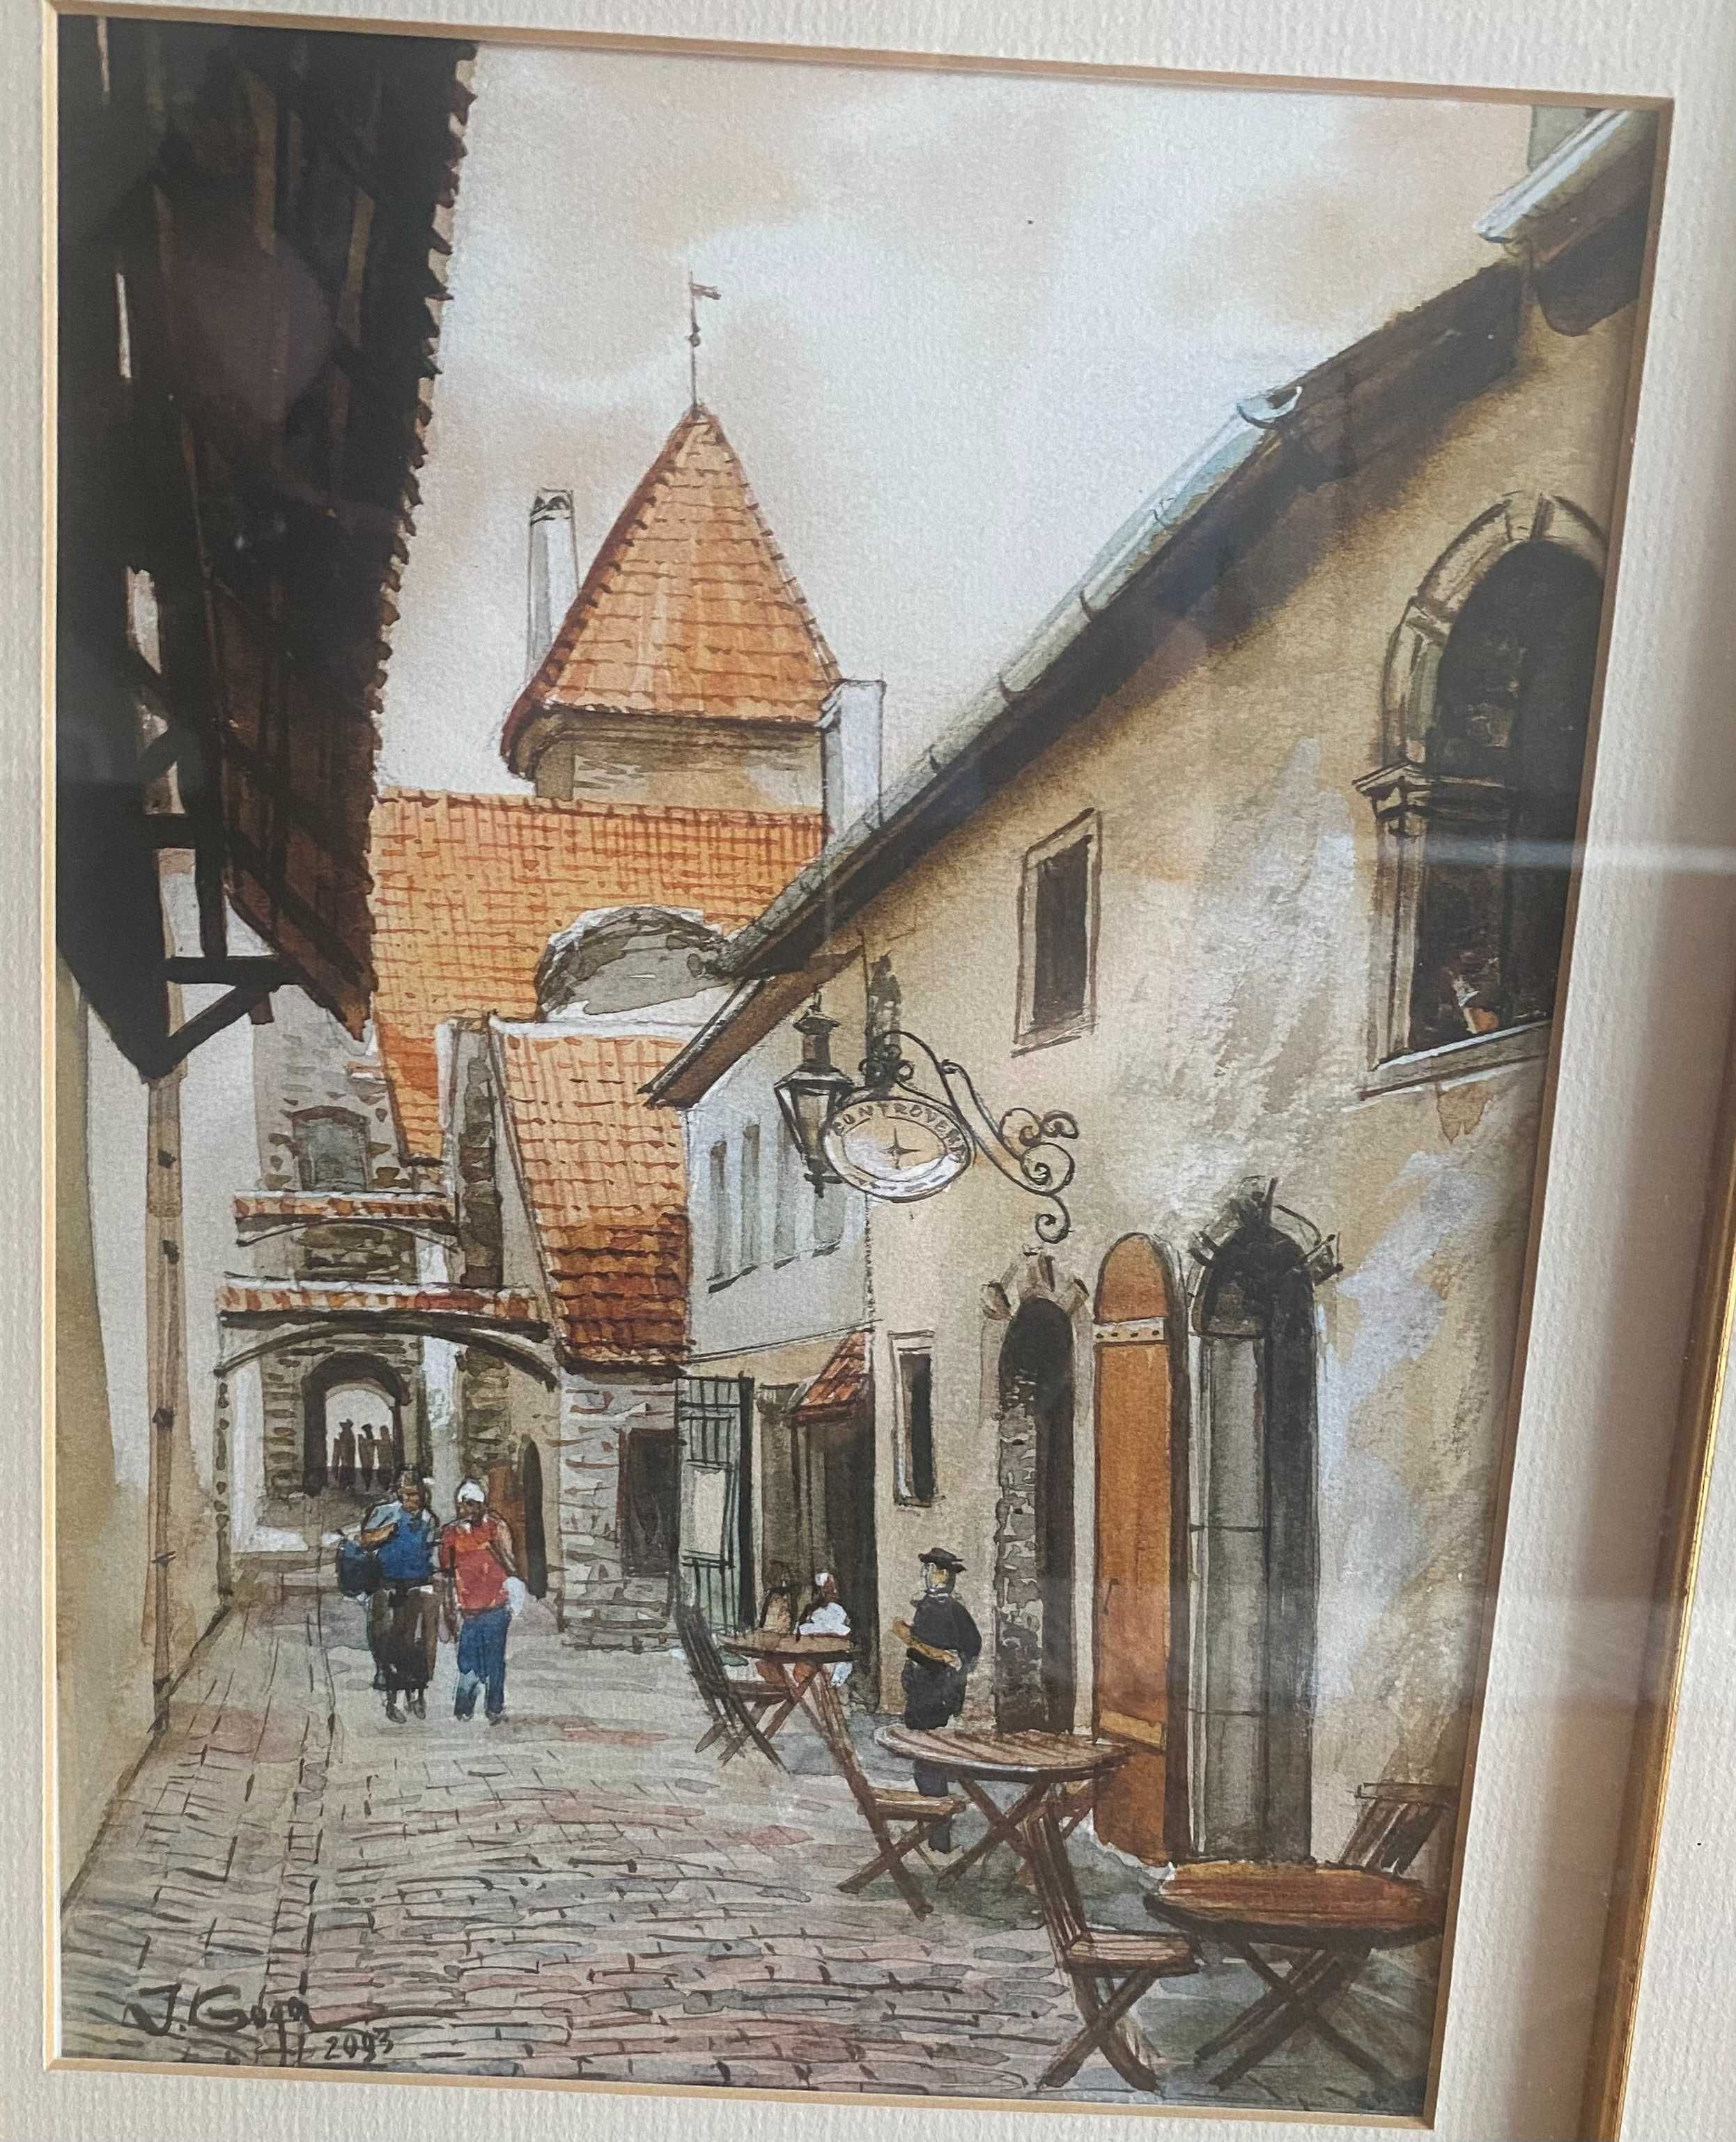 Two paintings of Estonian street life